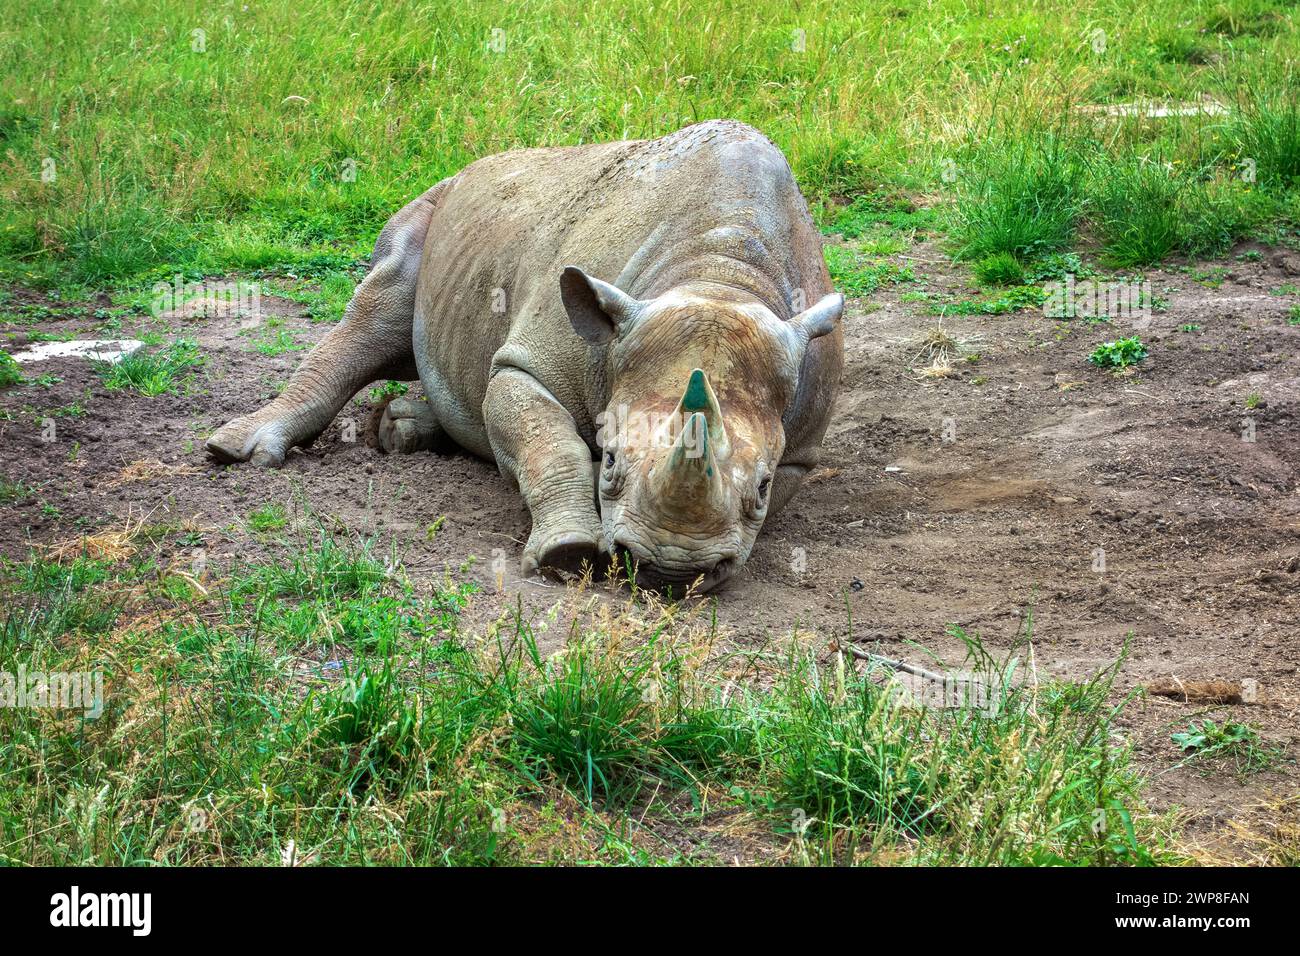 Rhinoceros lying down taken at Port Lympne Safari Park Stock Photo